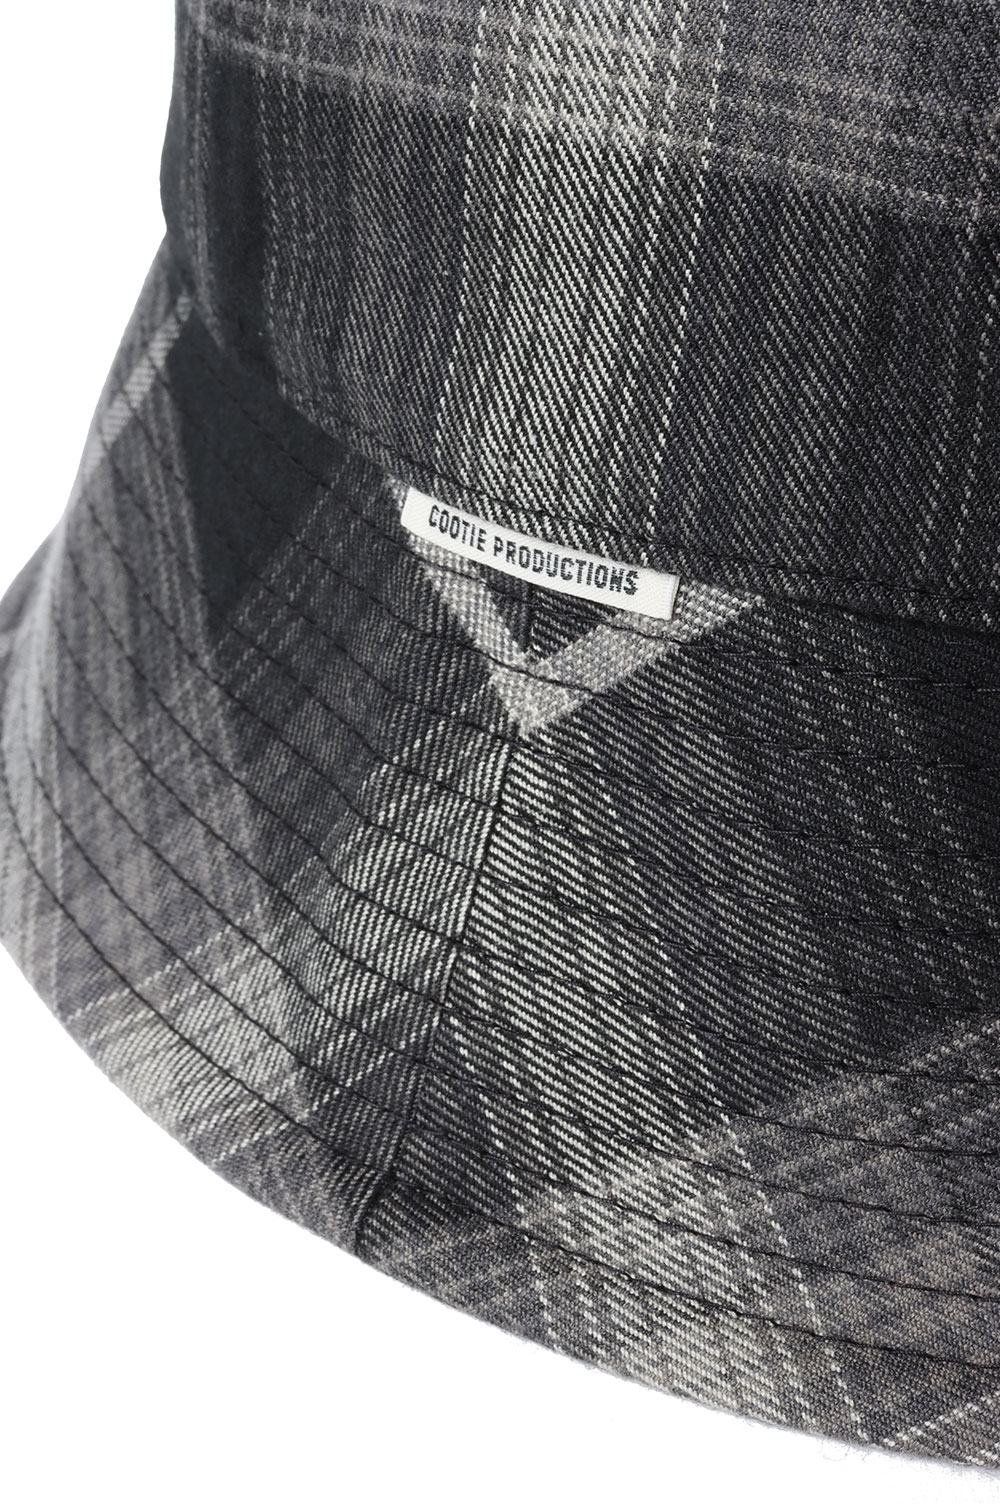 R/C Ombre Check Ball Hat(CTE-23S509)-Black- | セレクトショップ